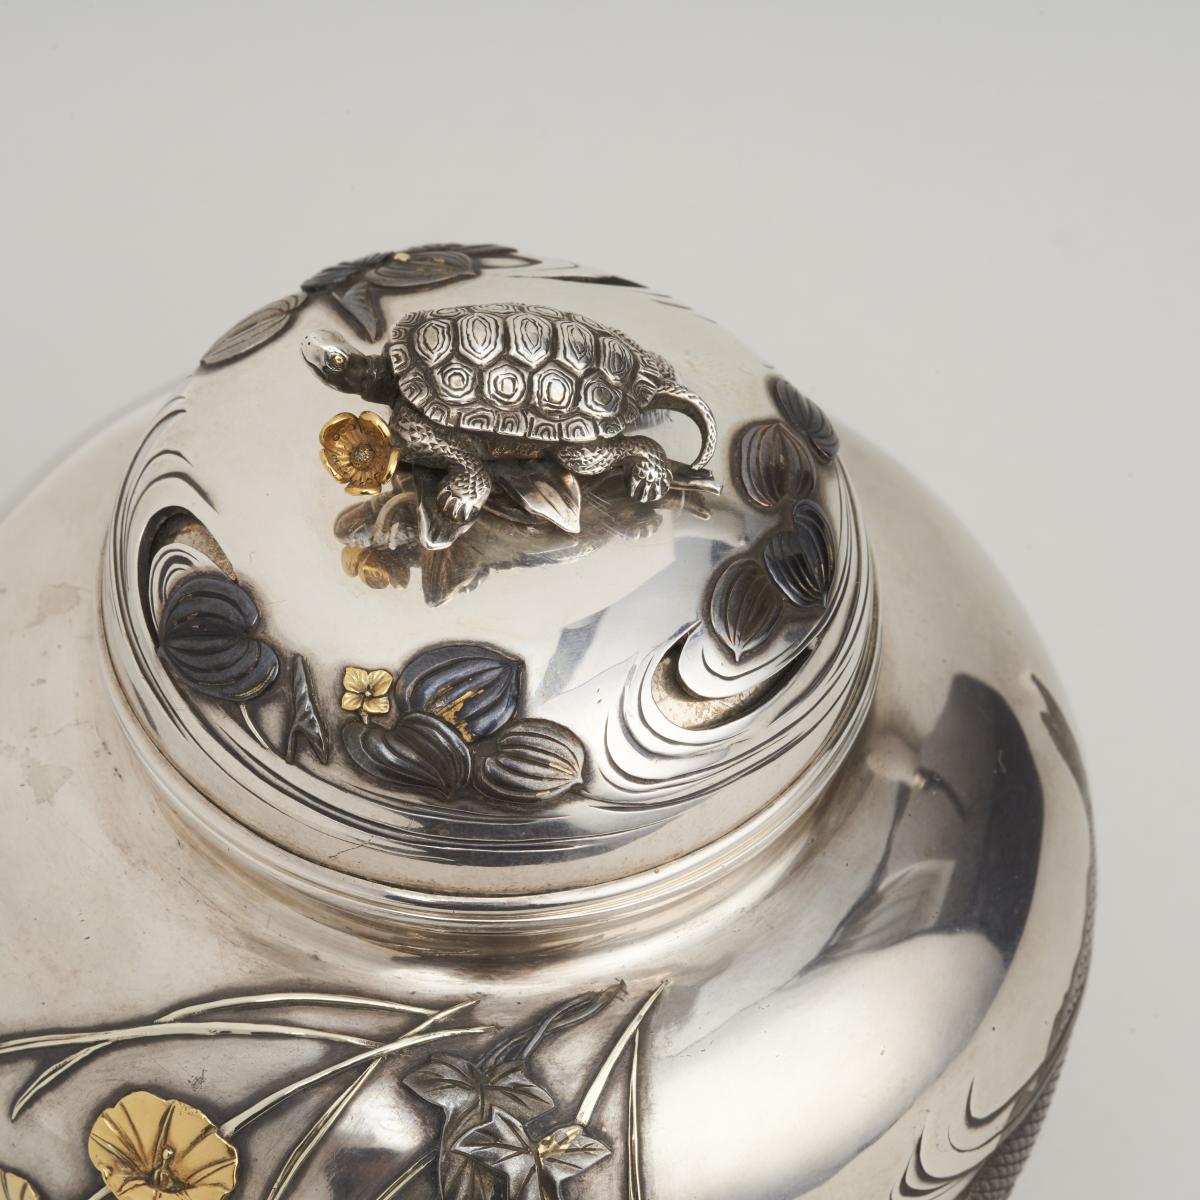 Japanese Meiji Period Silver Koro Decorated With Carp Bada